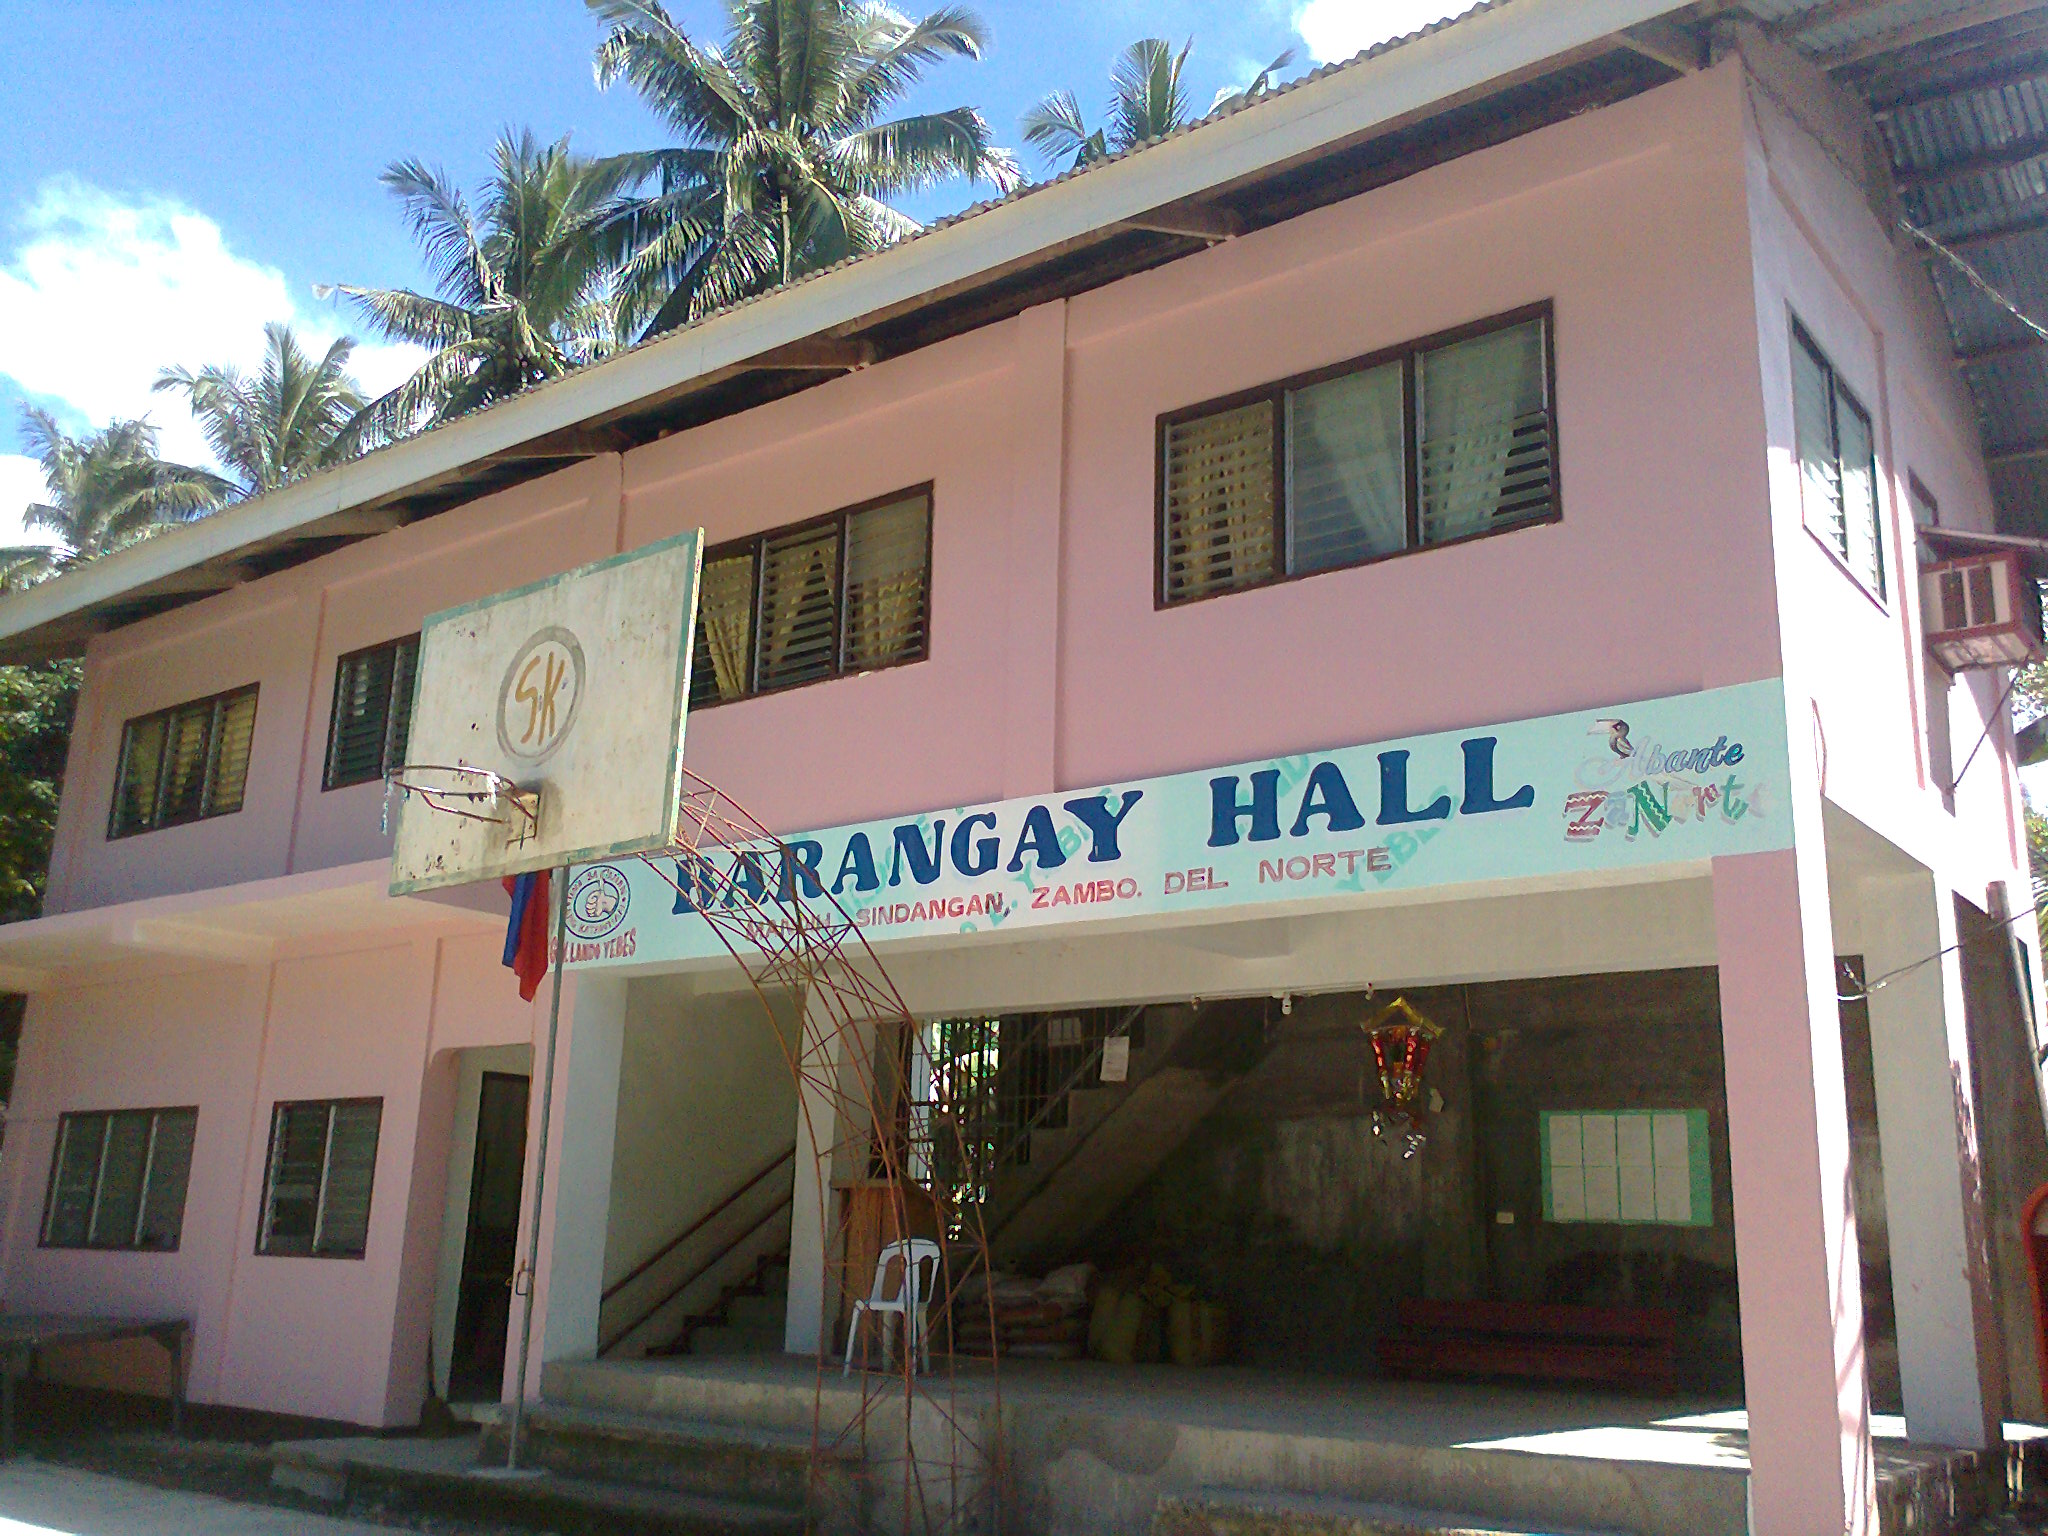 Barangay hall clipart 7 » Clipart Station.